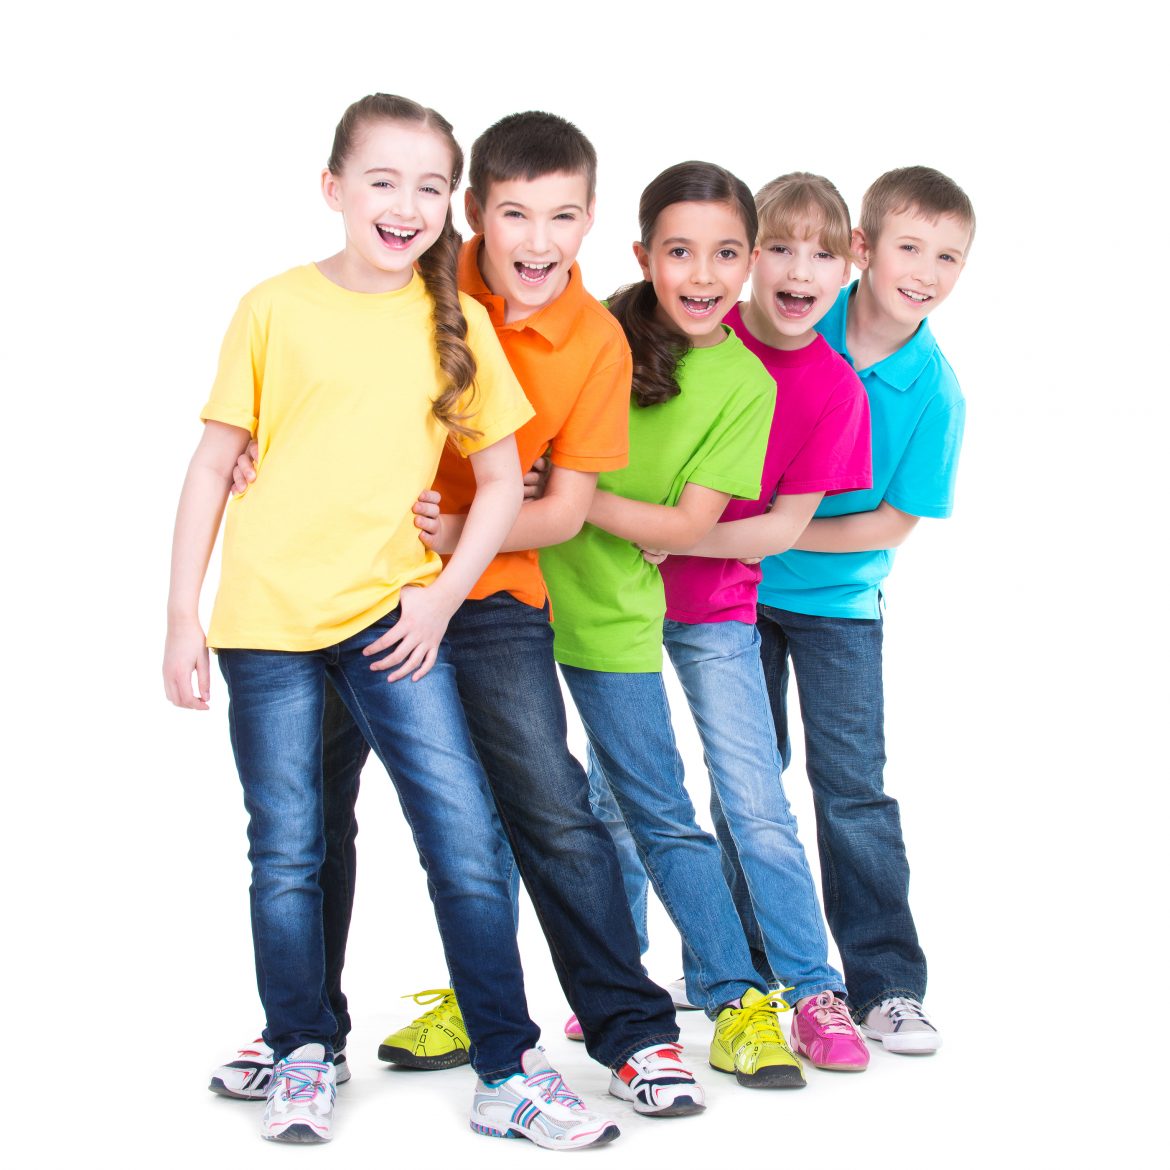 bigstock-Group-of-happy-children-in-col-61695002.jpg